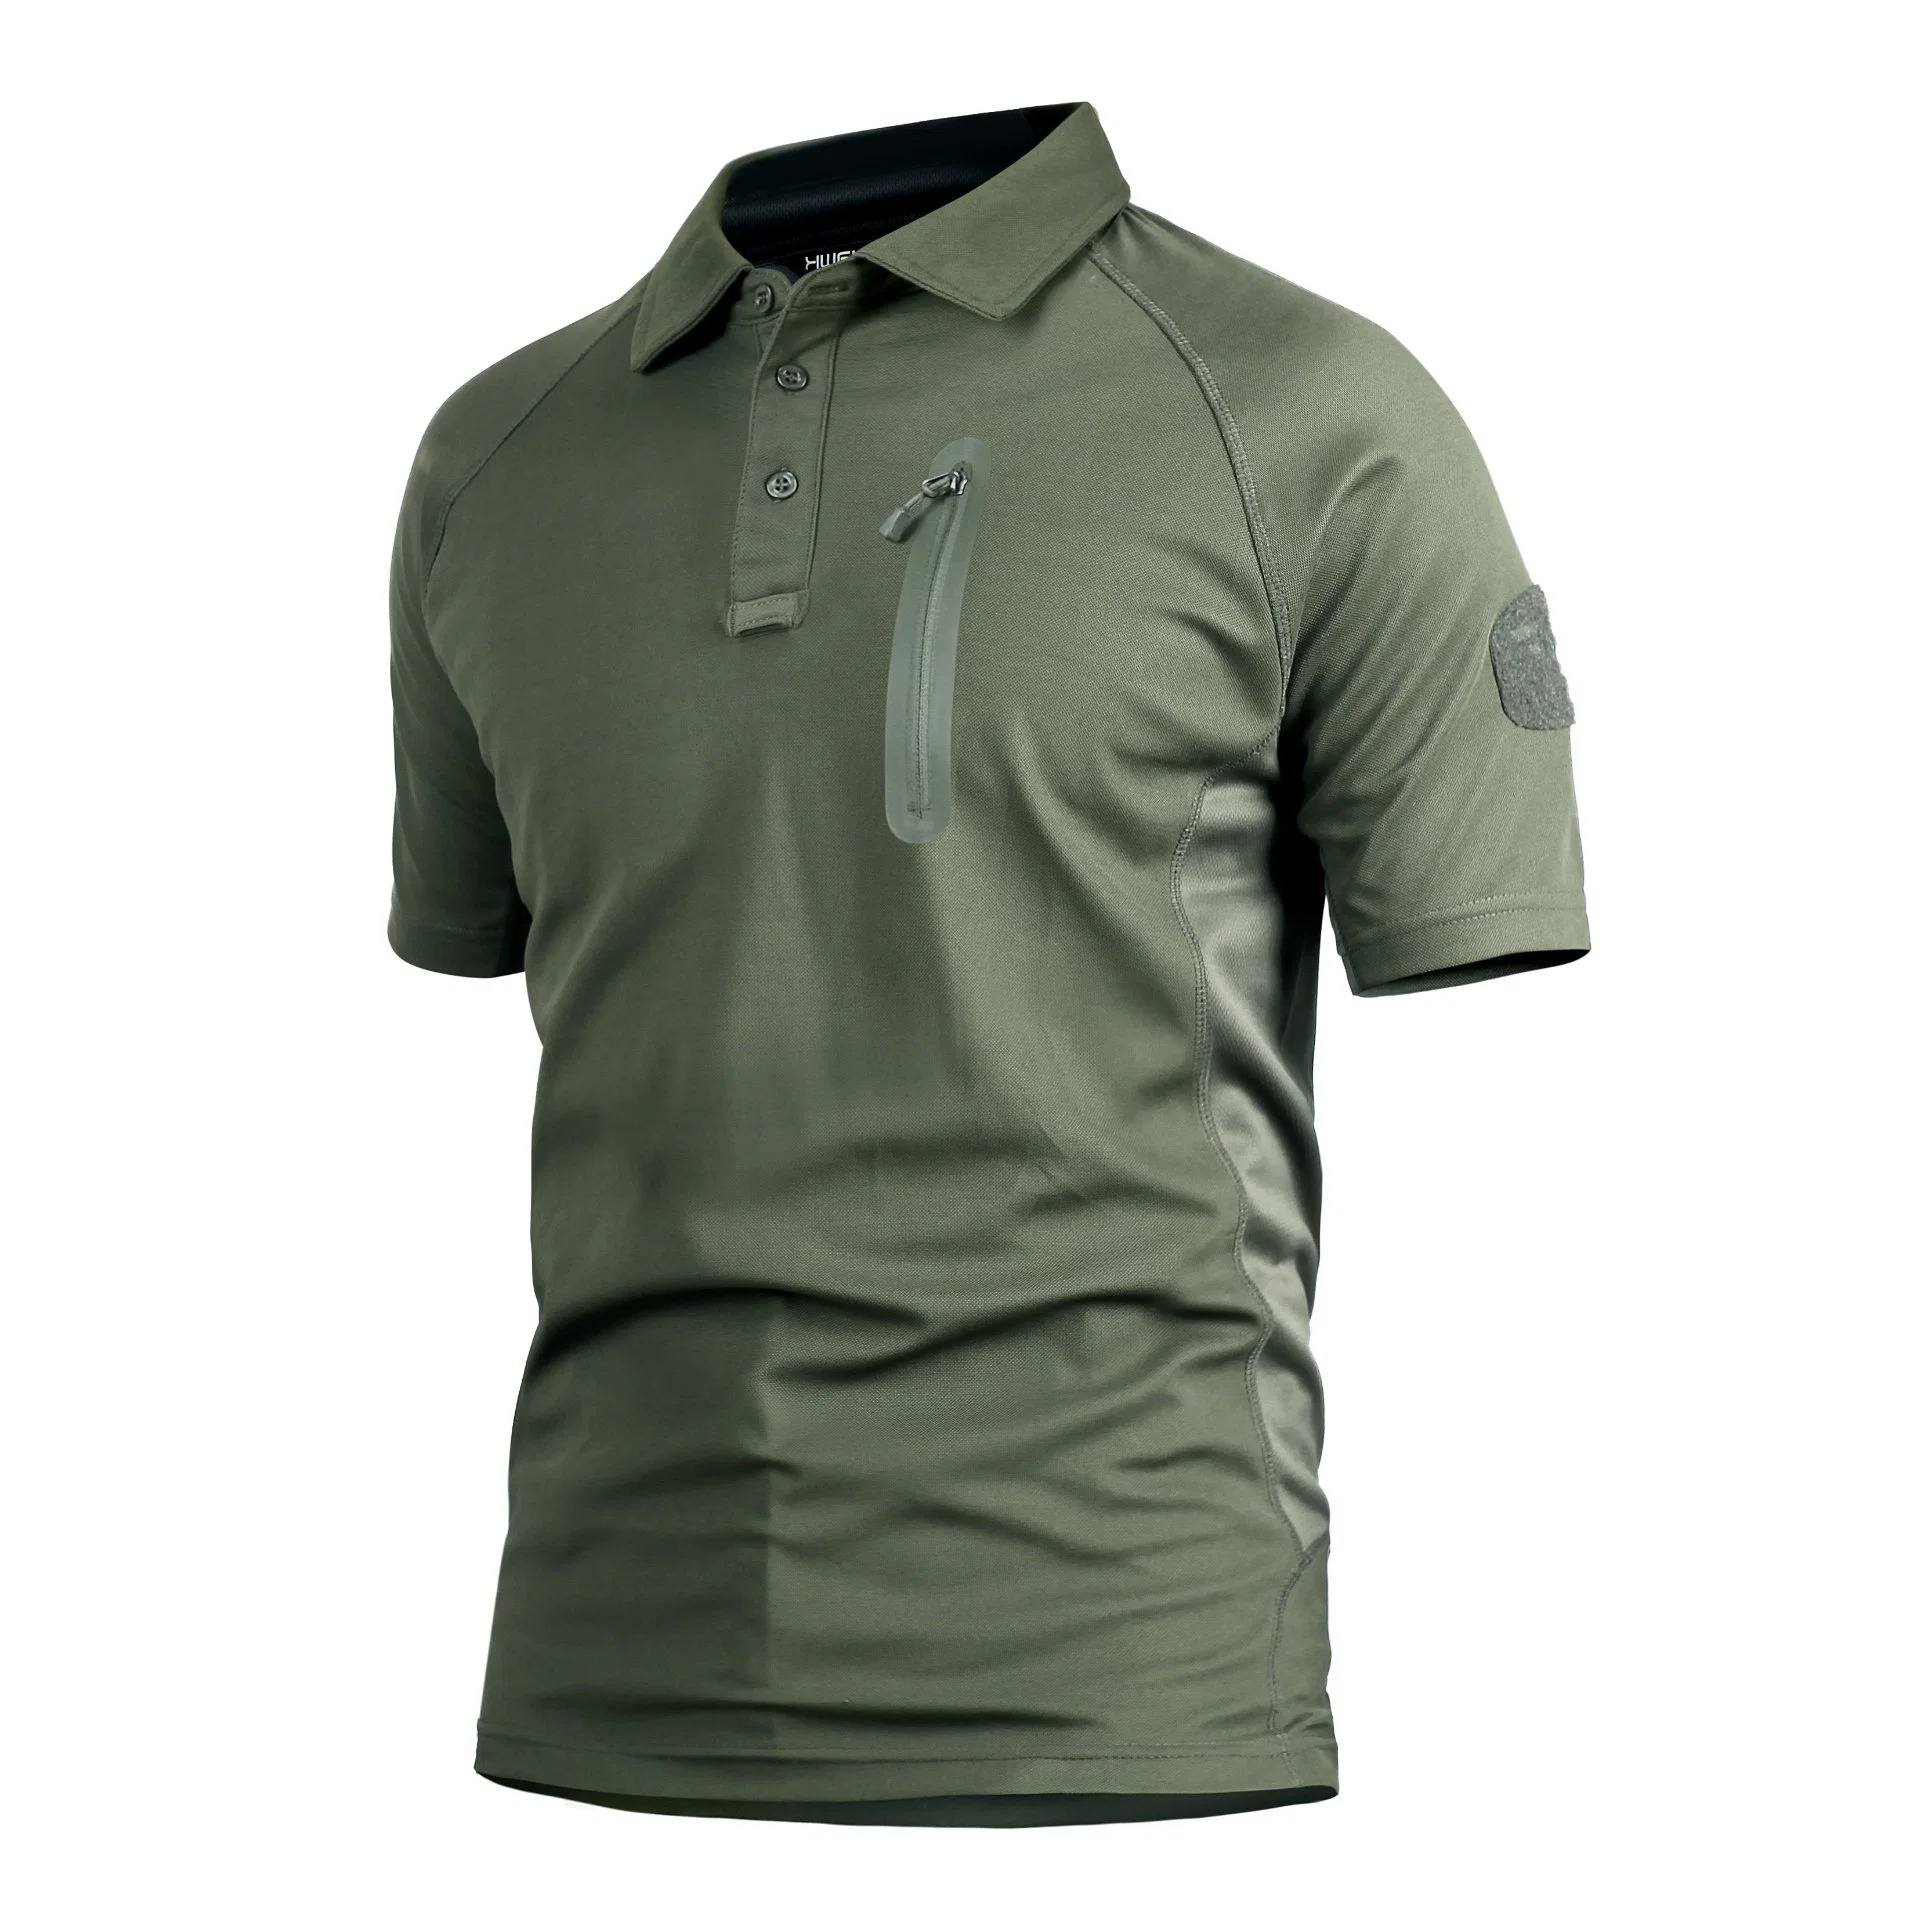 Men's Short Sleeve Quick Dry Tactical Plain Lapel Olive Green Military Training T-Shirt Golf Polo Shirts